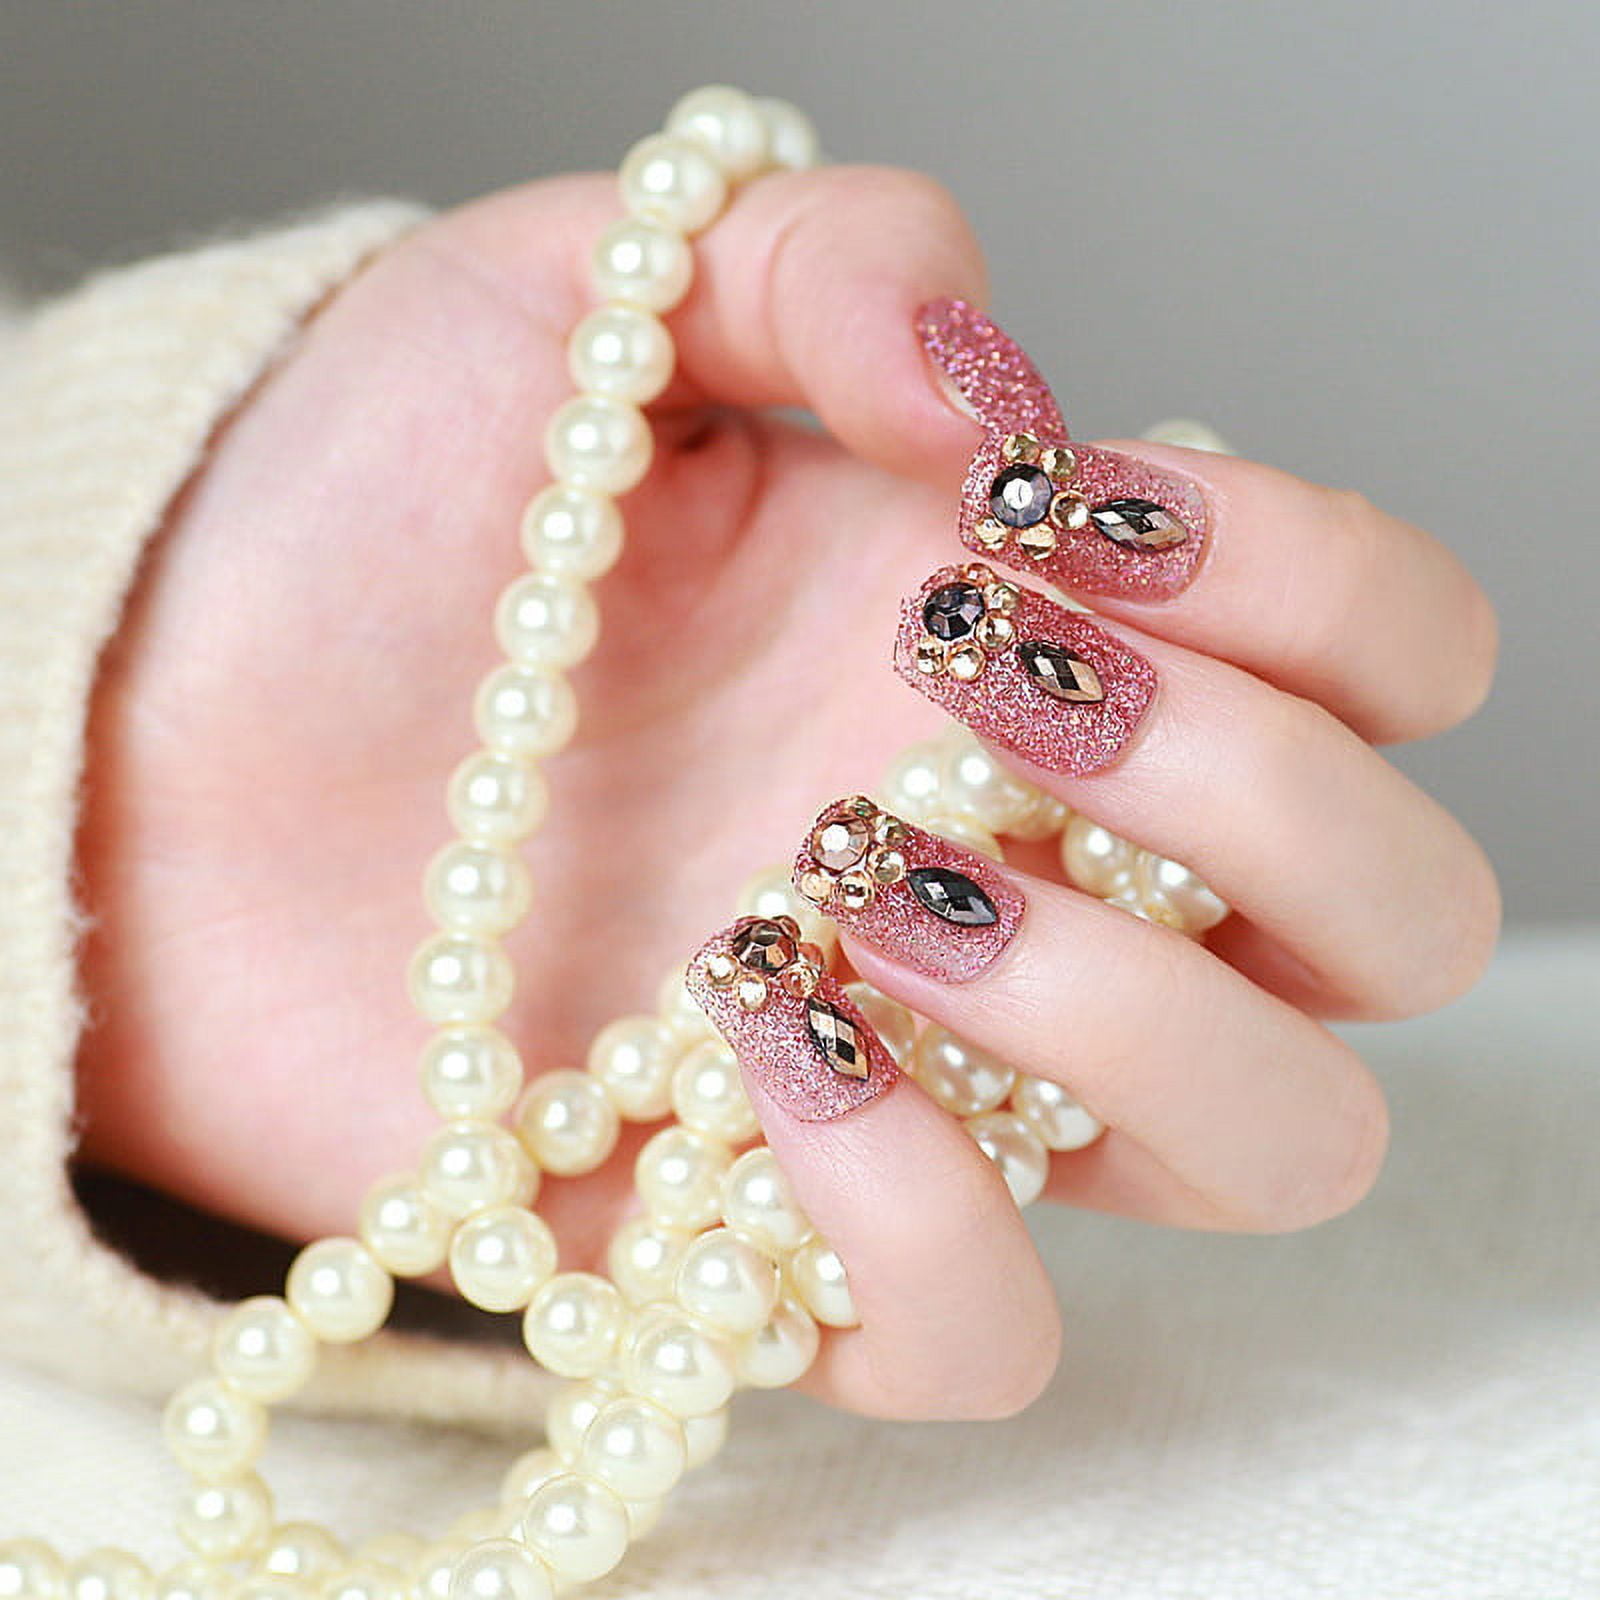 Dropship Stylish Wedding Bridal Nail Jewelry French Nails Rhinestone Nail  Art False Nails, #19 to Sell Online at a Lower Price